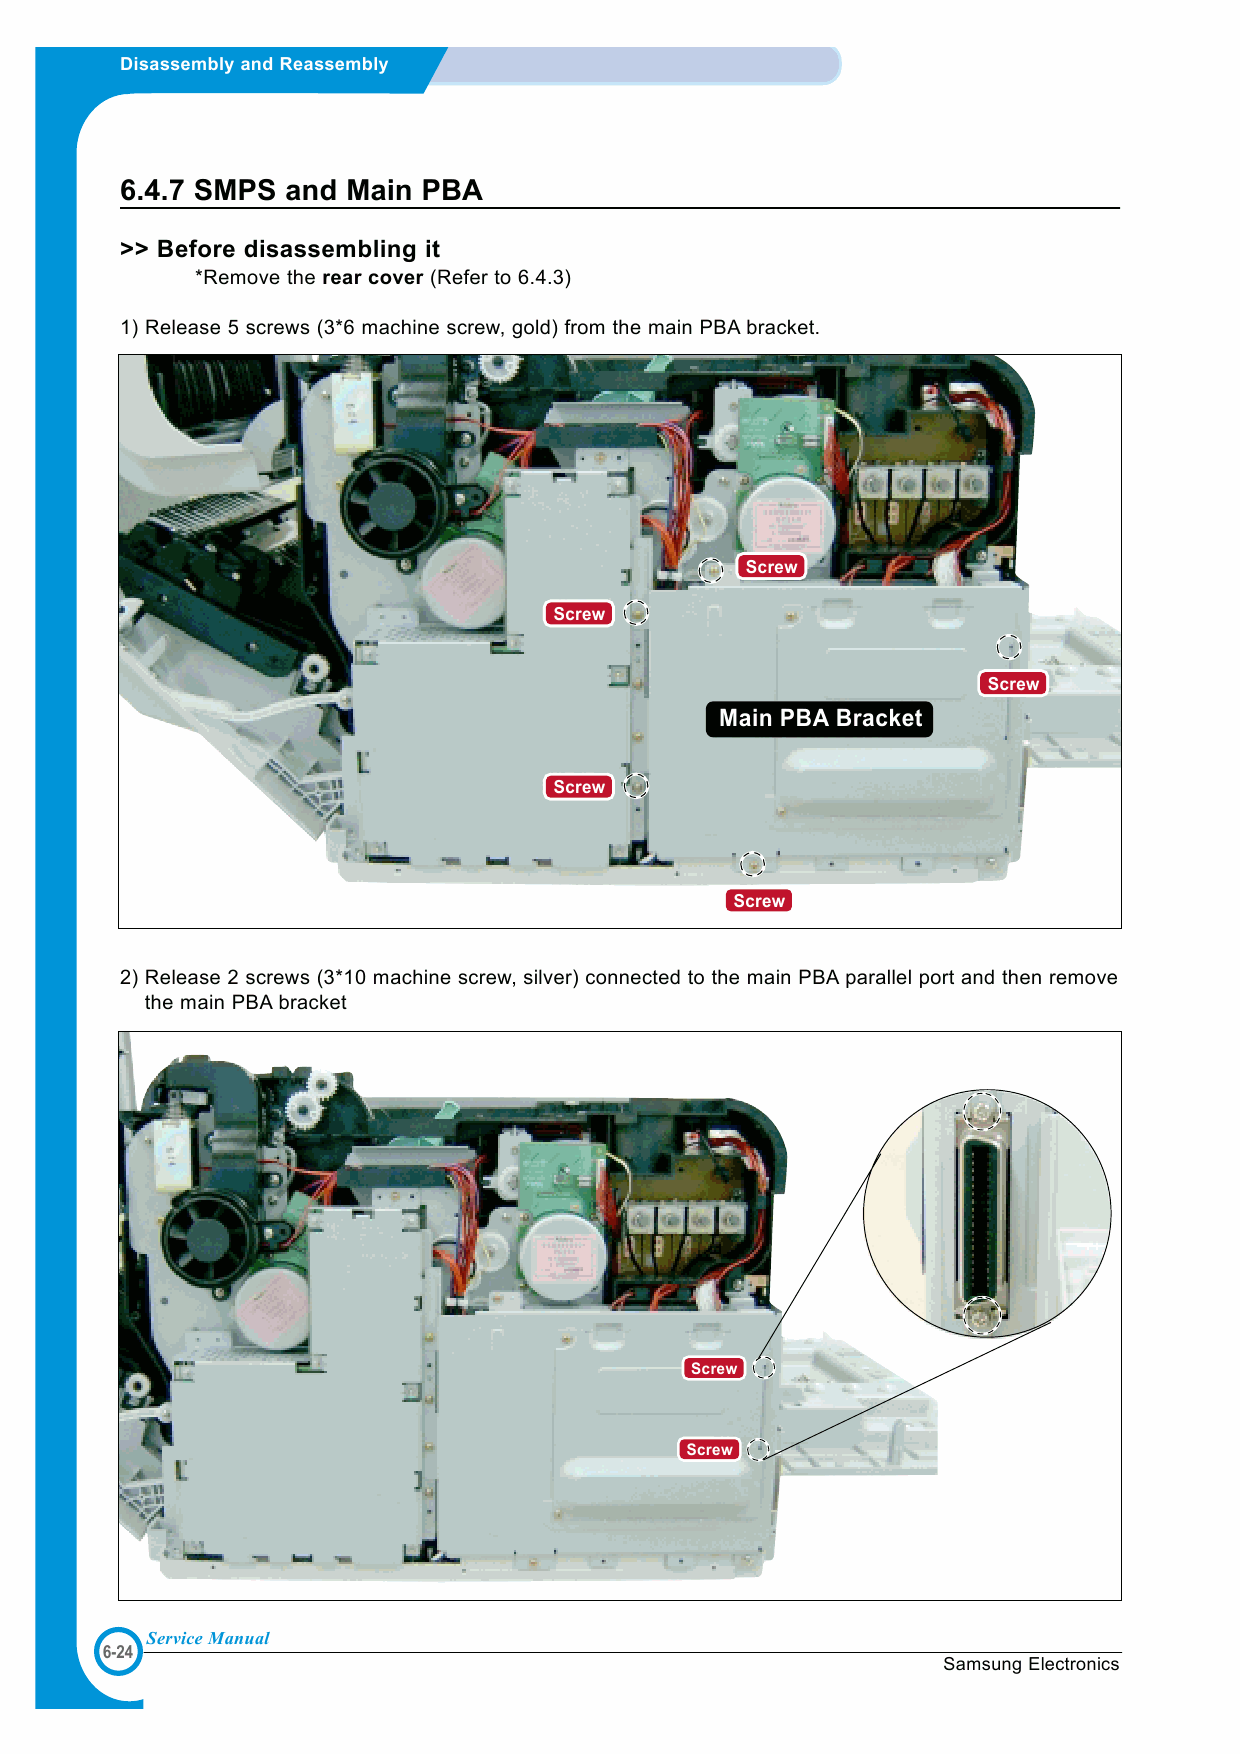 Samsung Color-Laser-Printer CLP-500 Series Parts and Service Manual-3